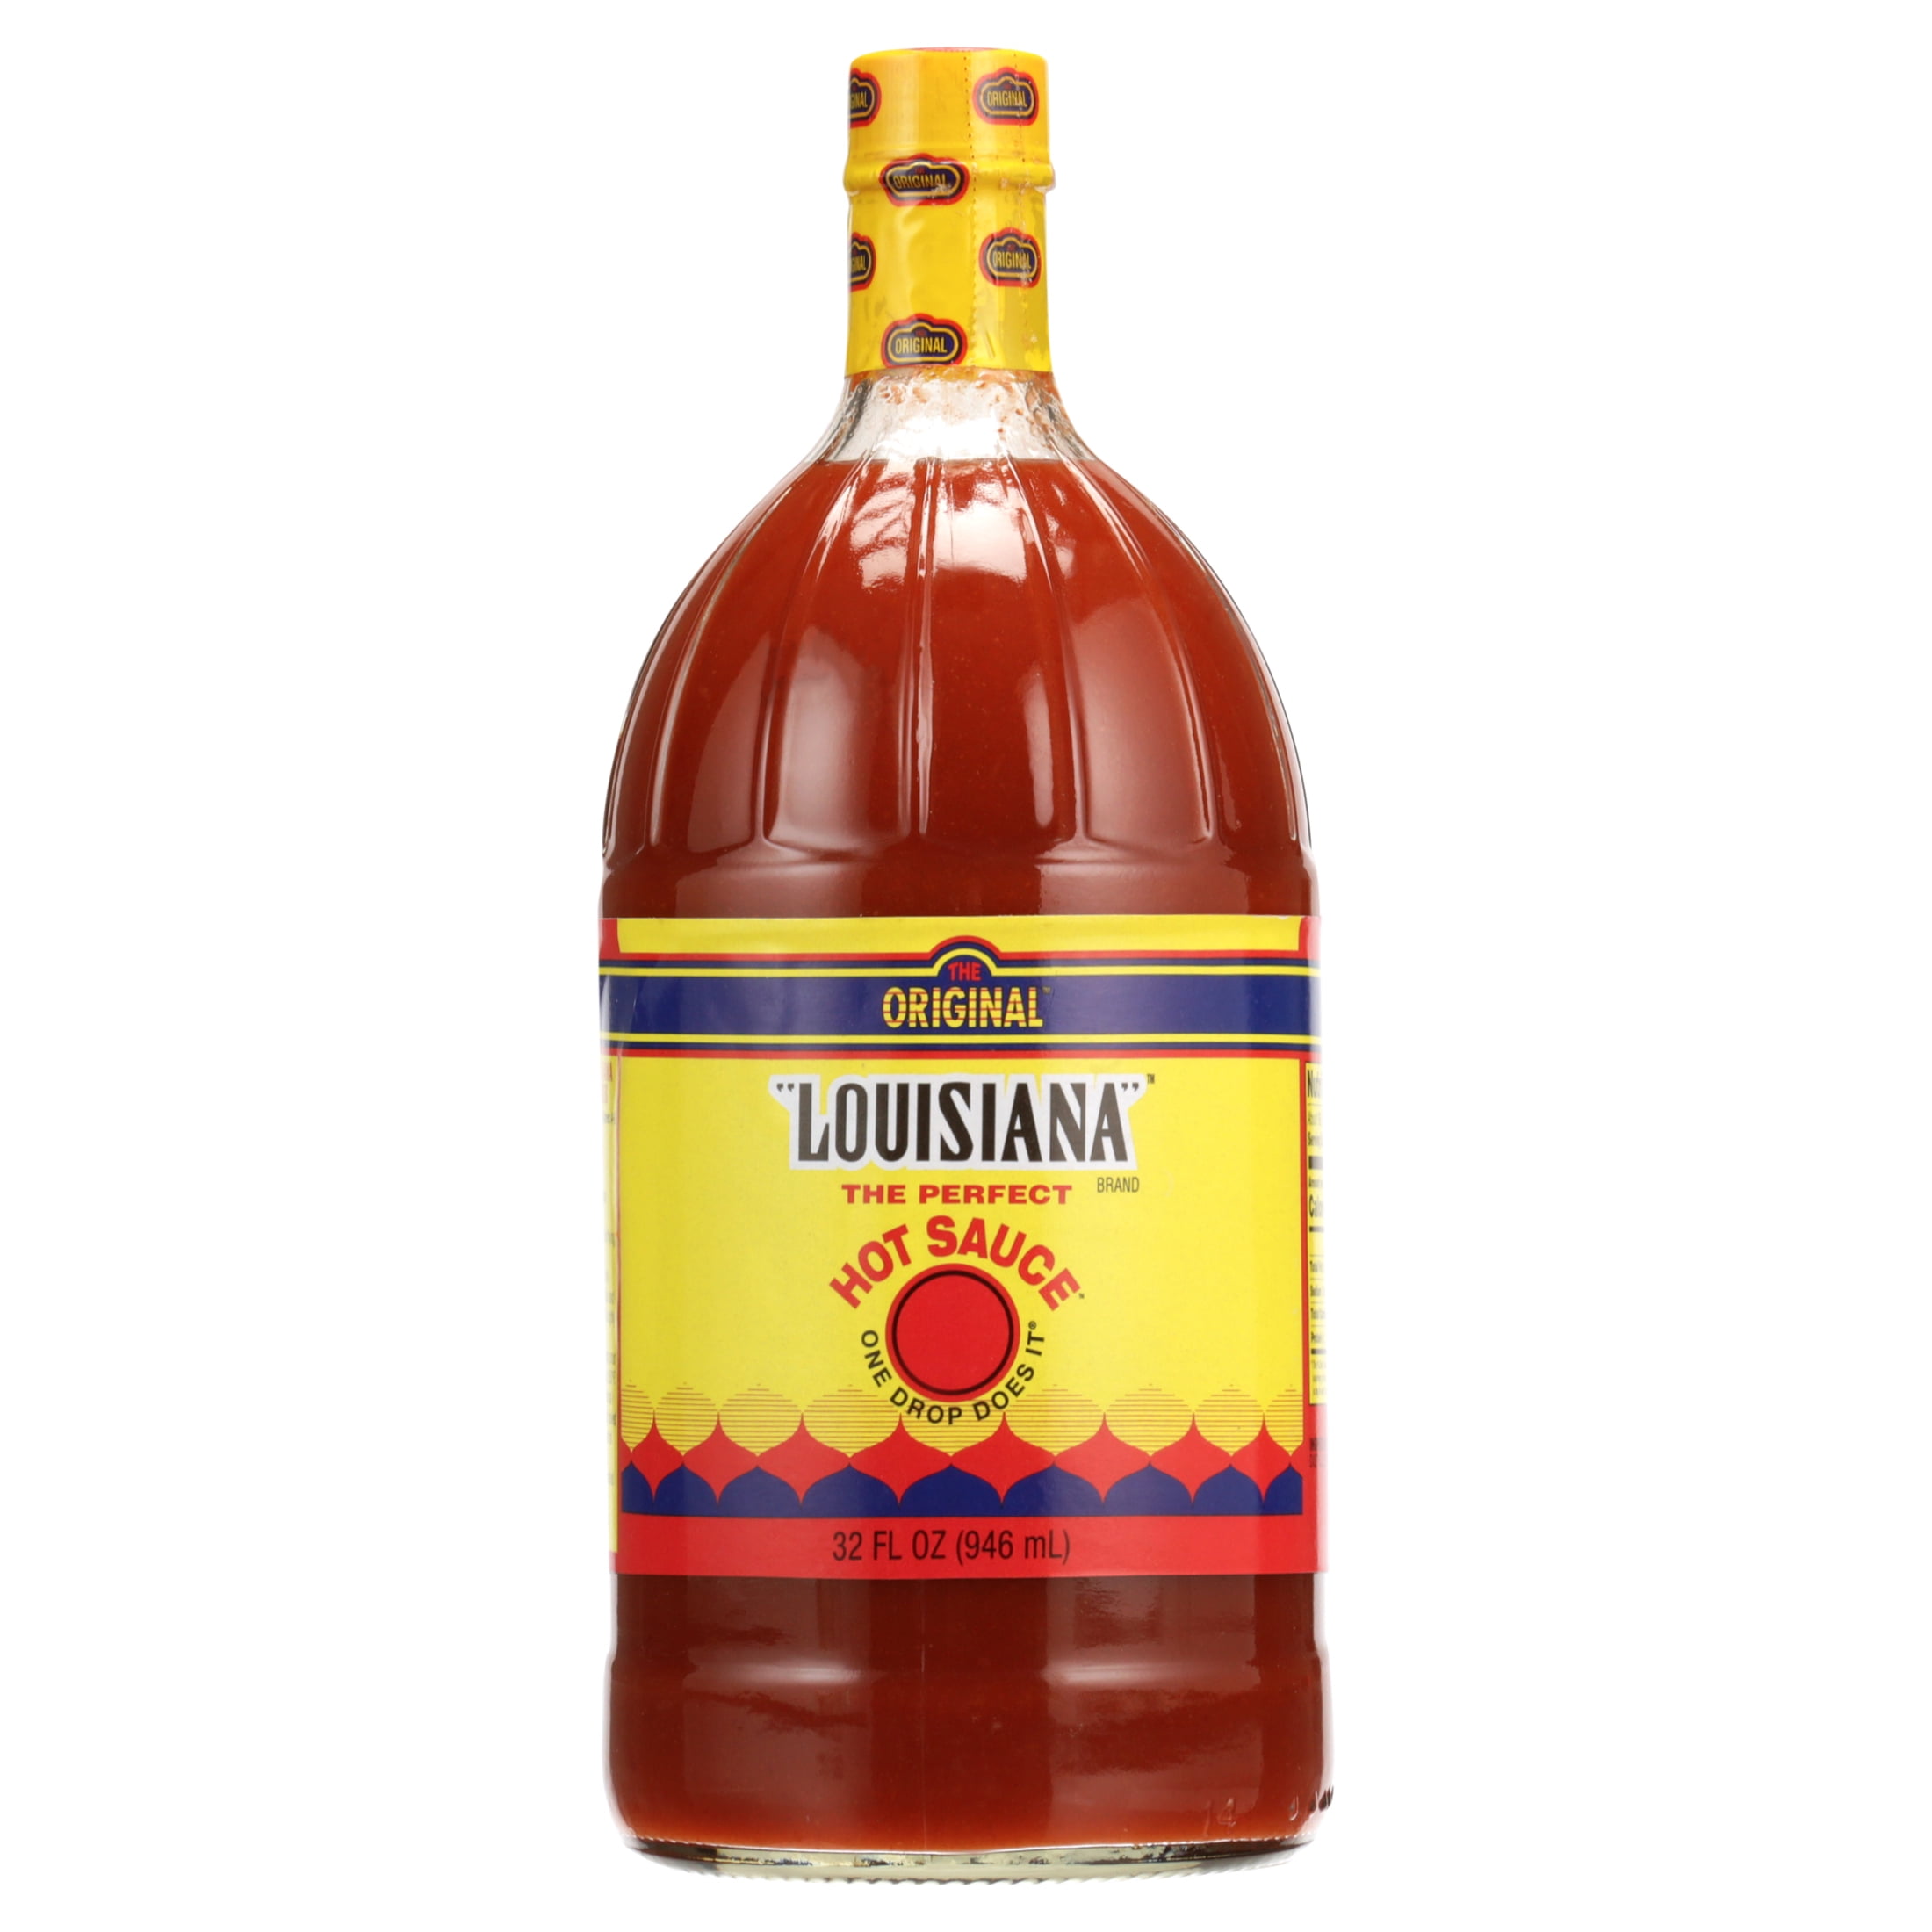 ORIGINAL Louisiana Hot Sauce (@louisiana_hot_sauce) • Instagram